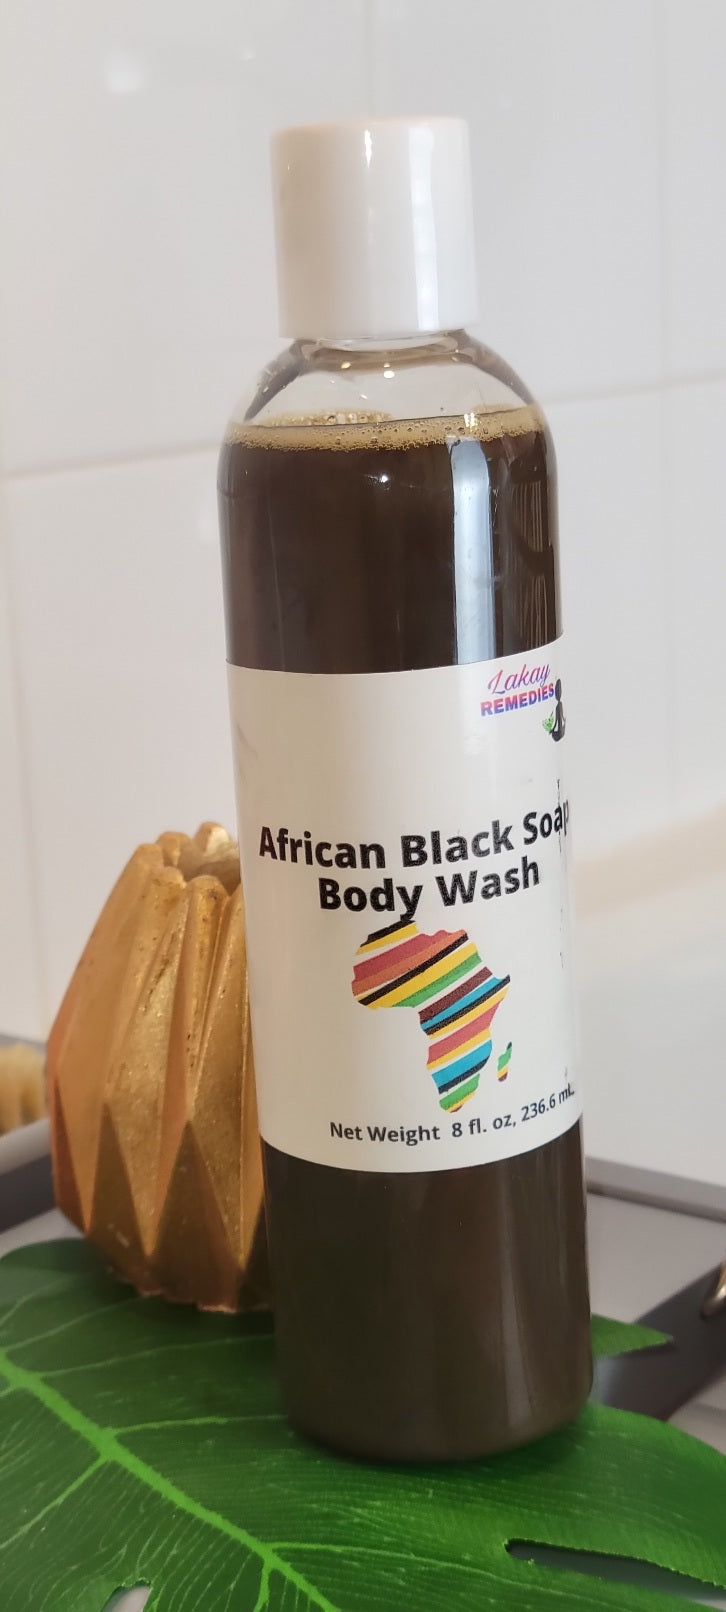 Lakay Remedies African Black Soap Body Wash